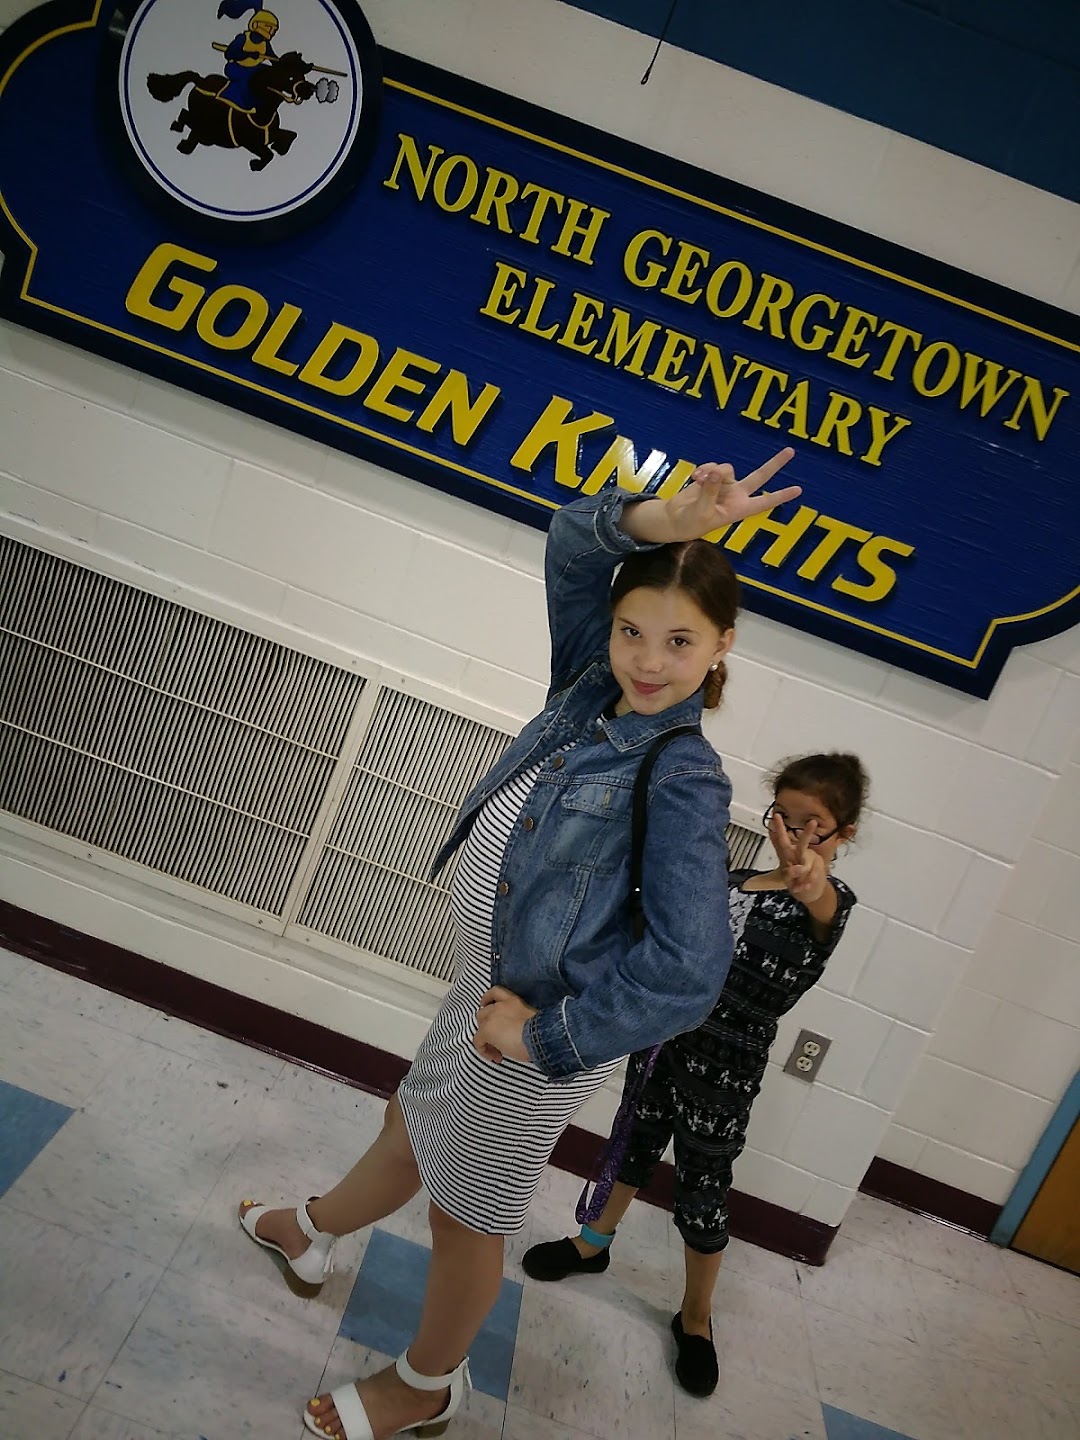 North Georgetown Elementary